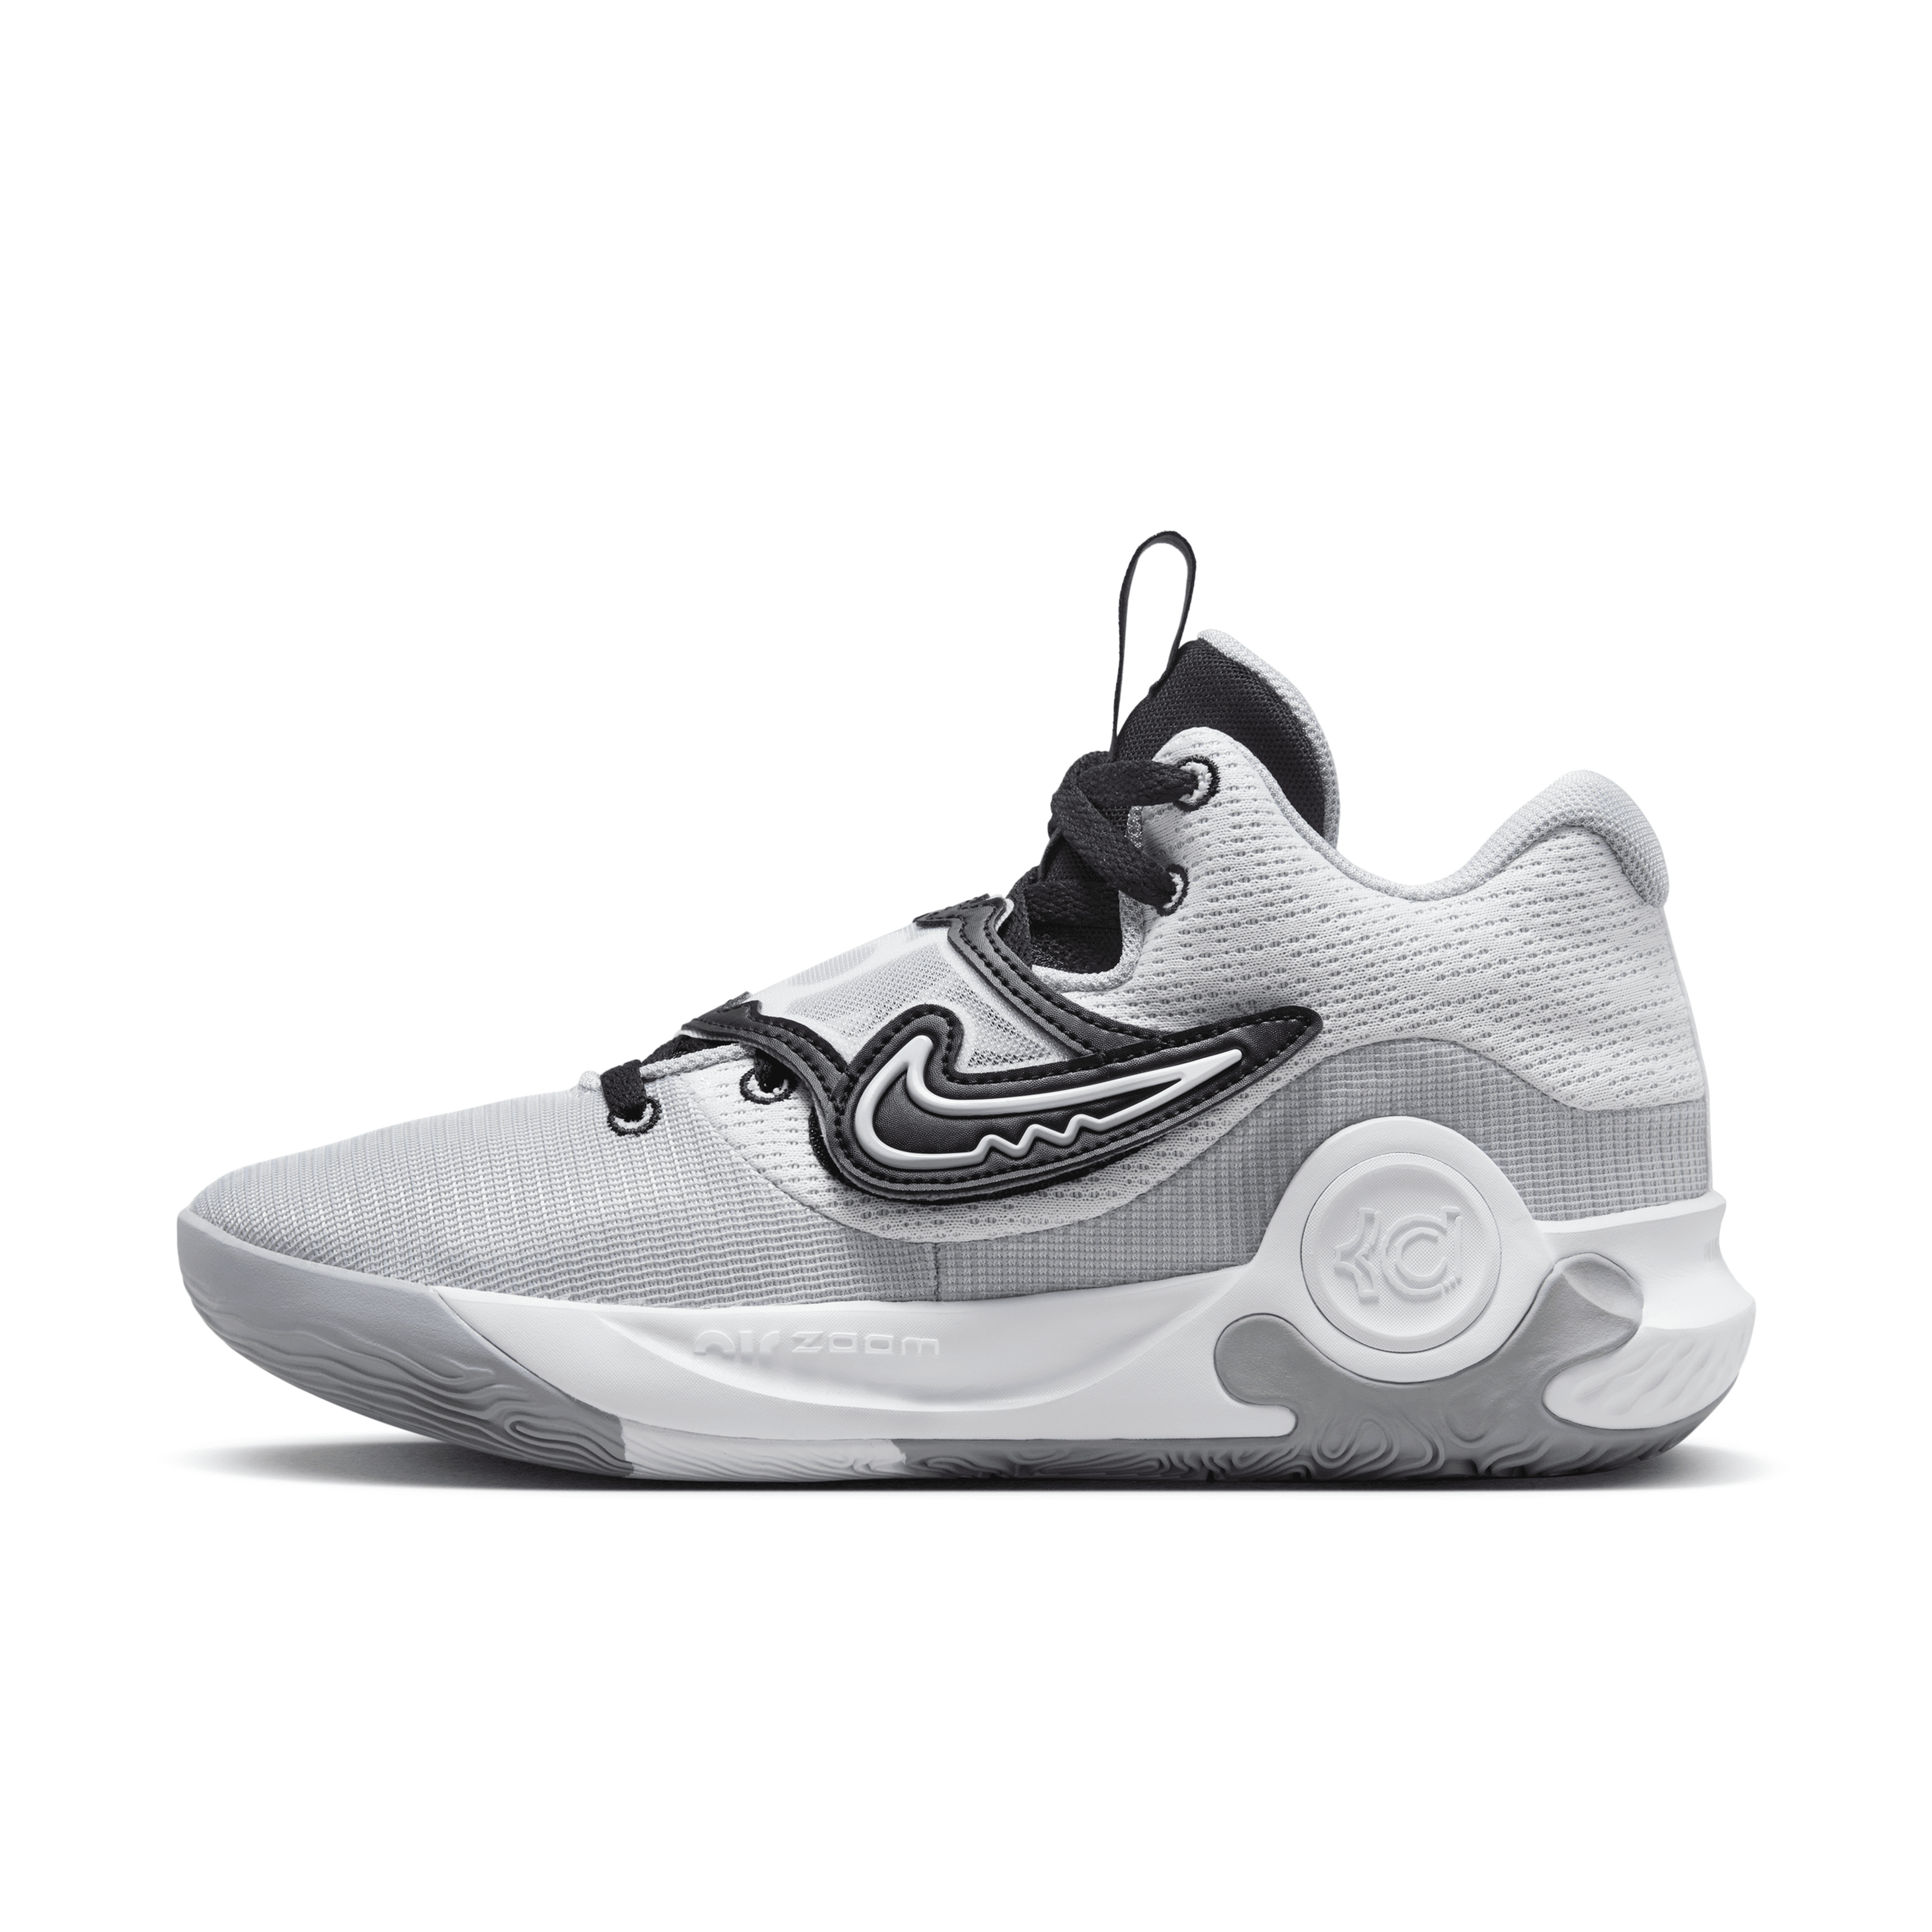 Nike Men's Kd Trey 5 X Basketball Shoes In White